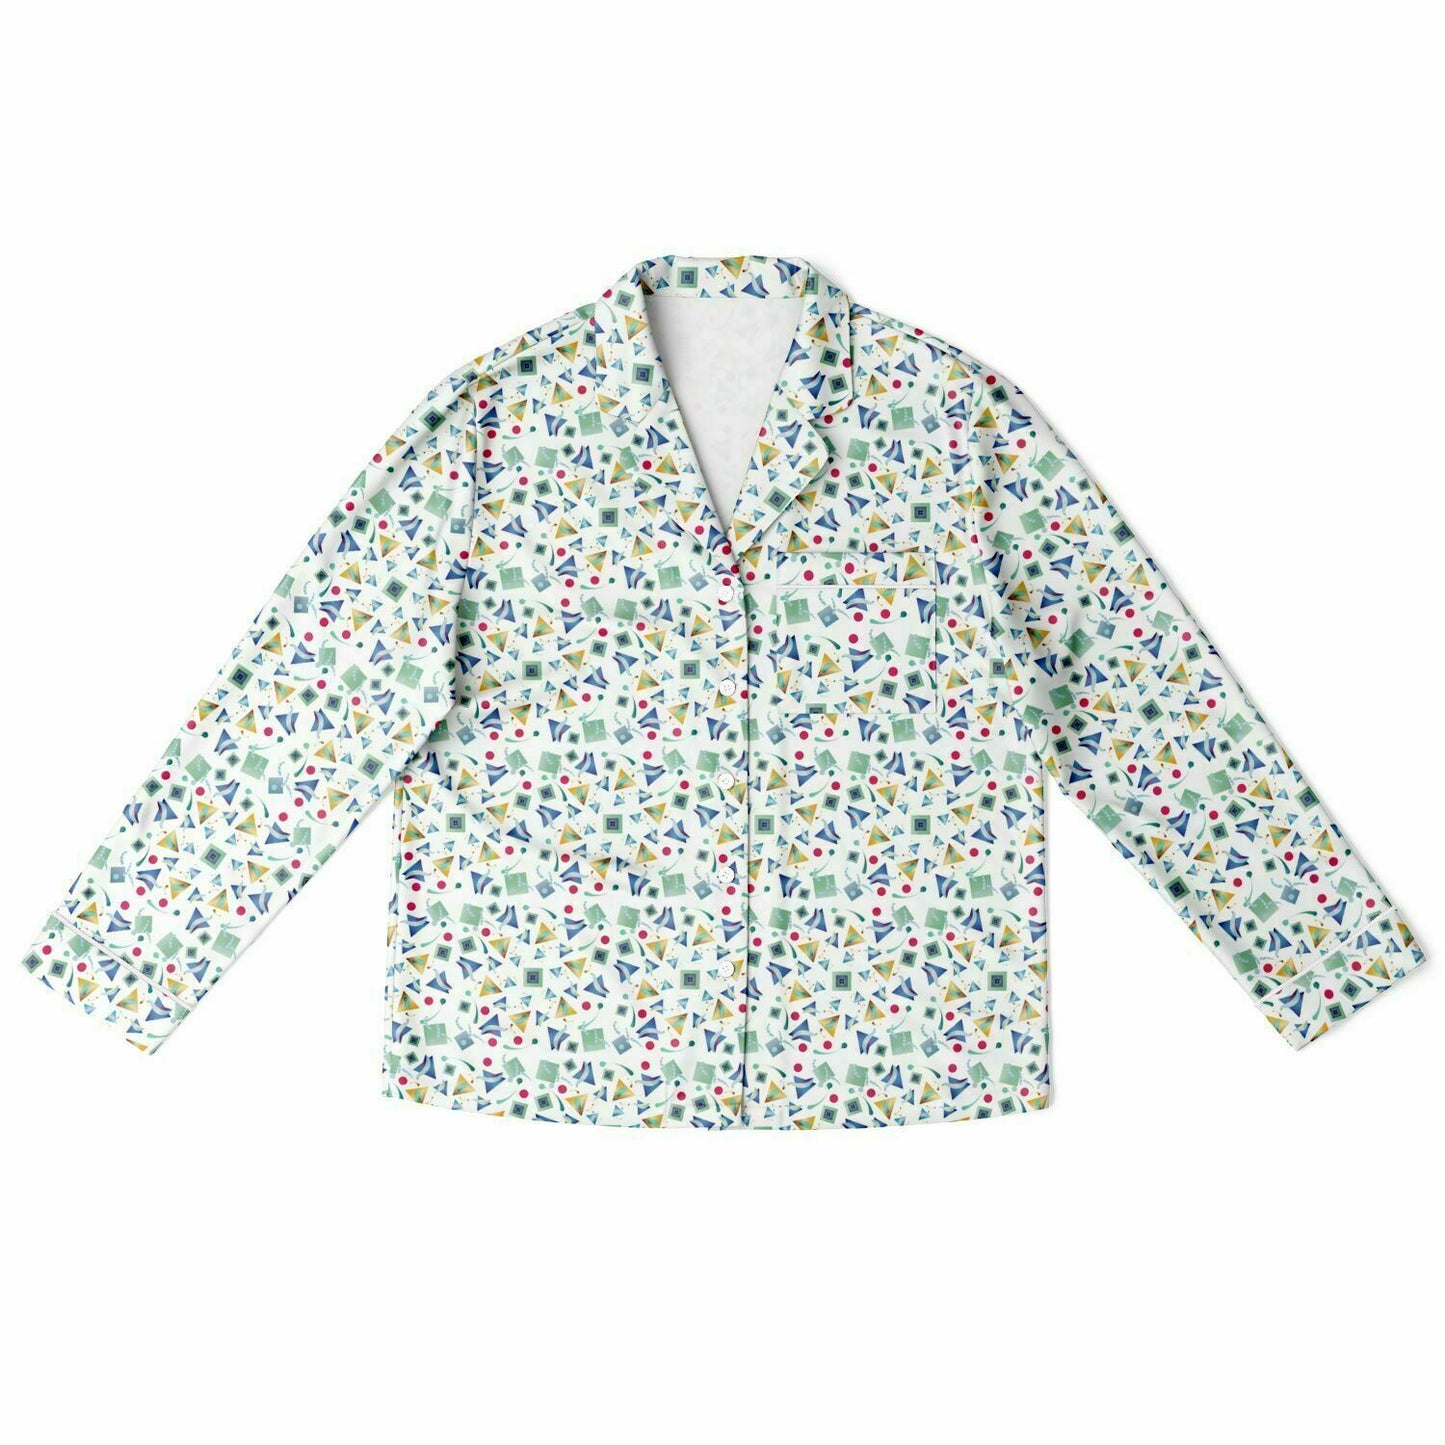 Women's Satin Pajamas - AOP Kukloso Whimsical No 11 Multi-Geometrical shapes & colors on White - Free Shipping